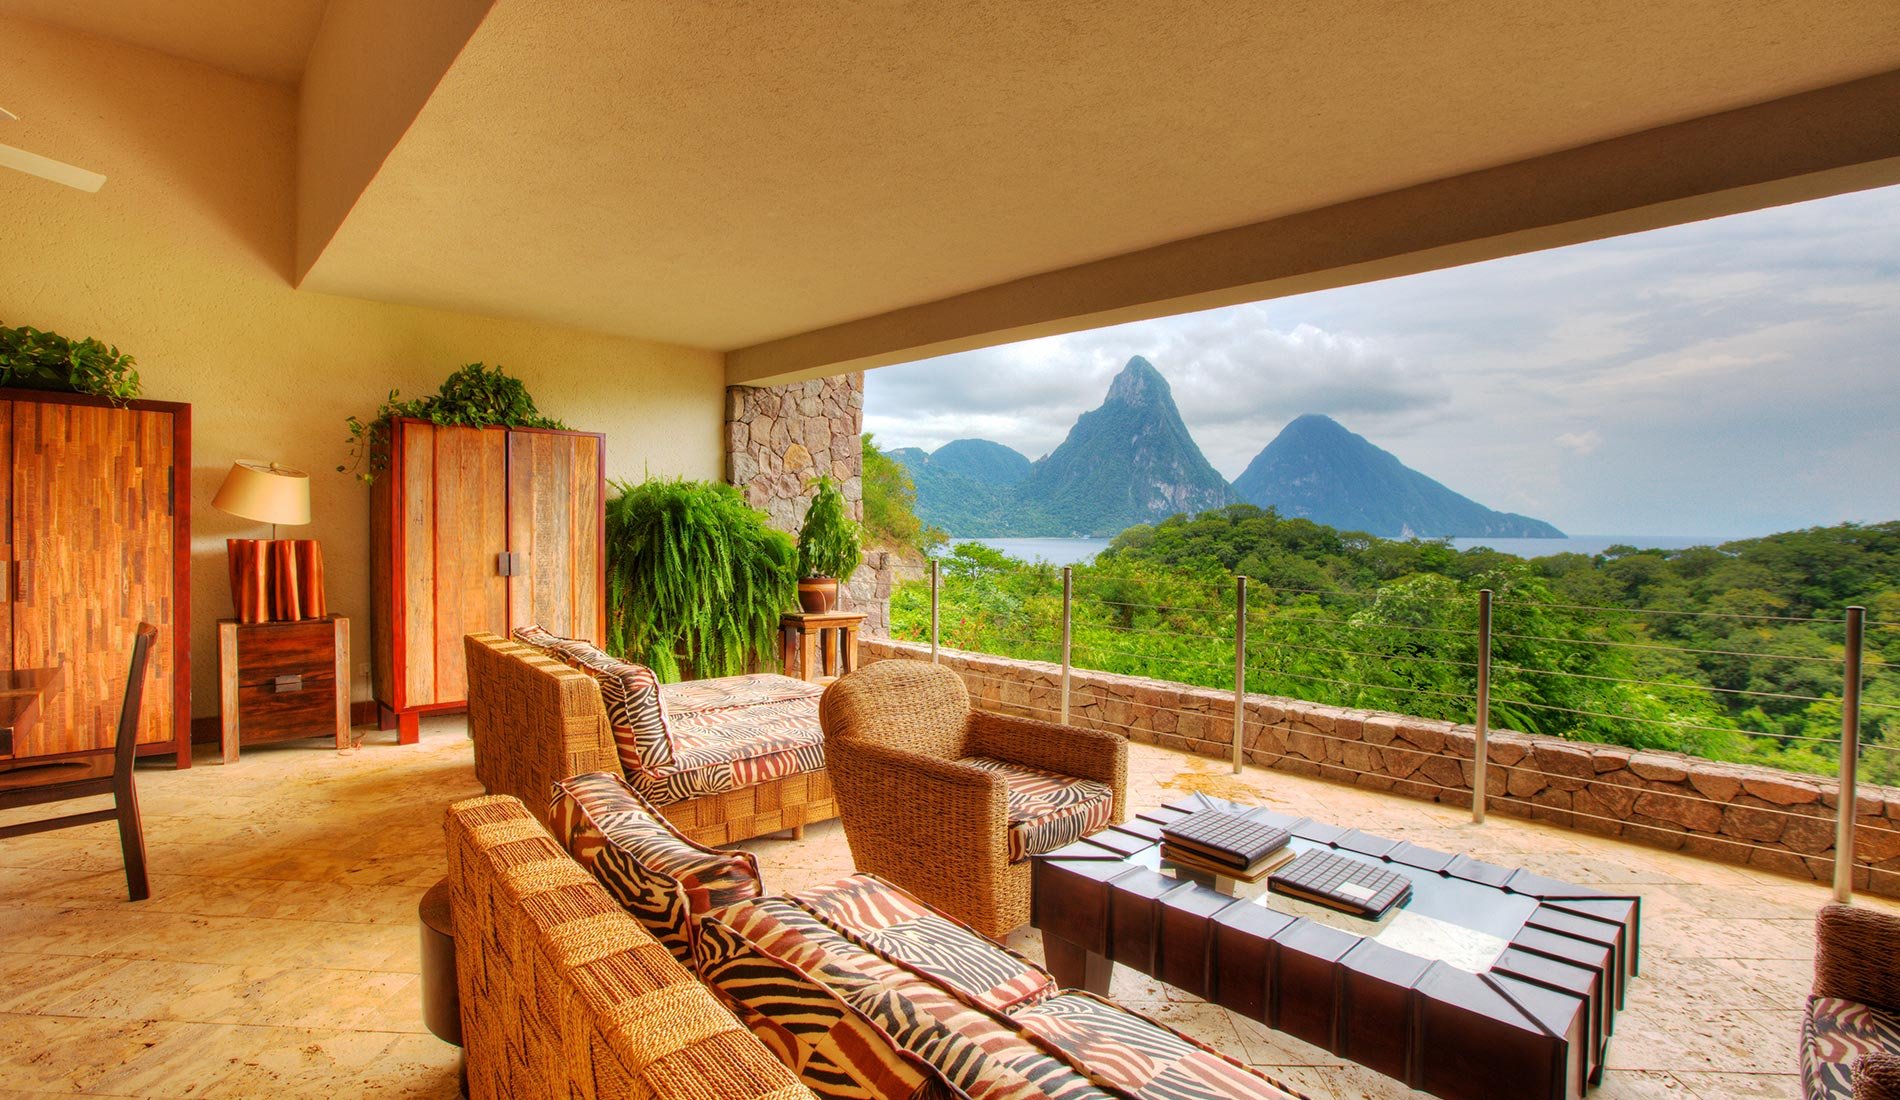 Hôtel de luxe Jade Mountain resort 5 étoiles Sainte-Lucie caraïbes vue chambre